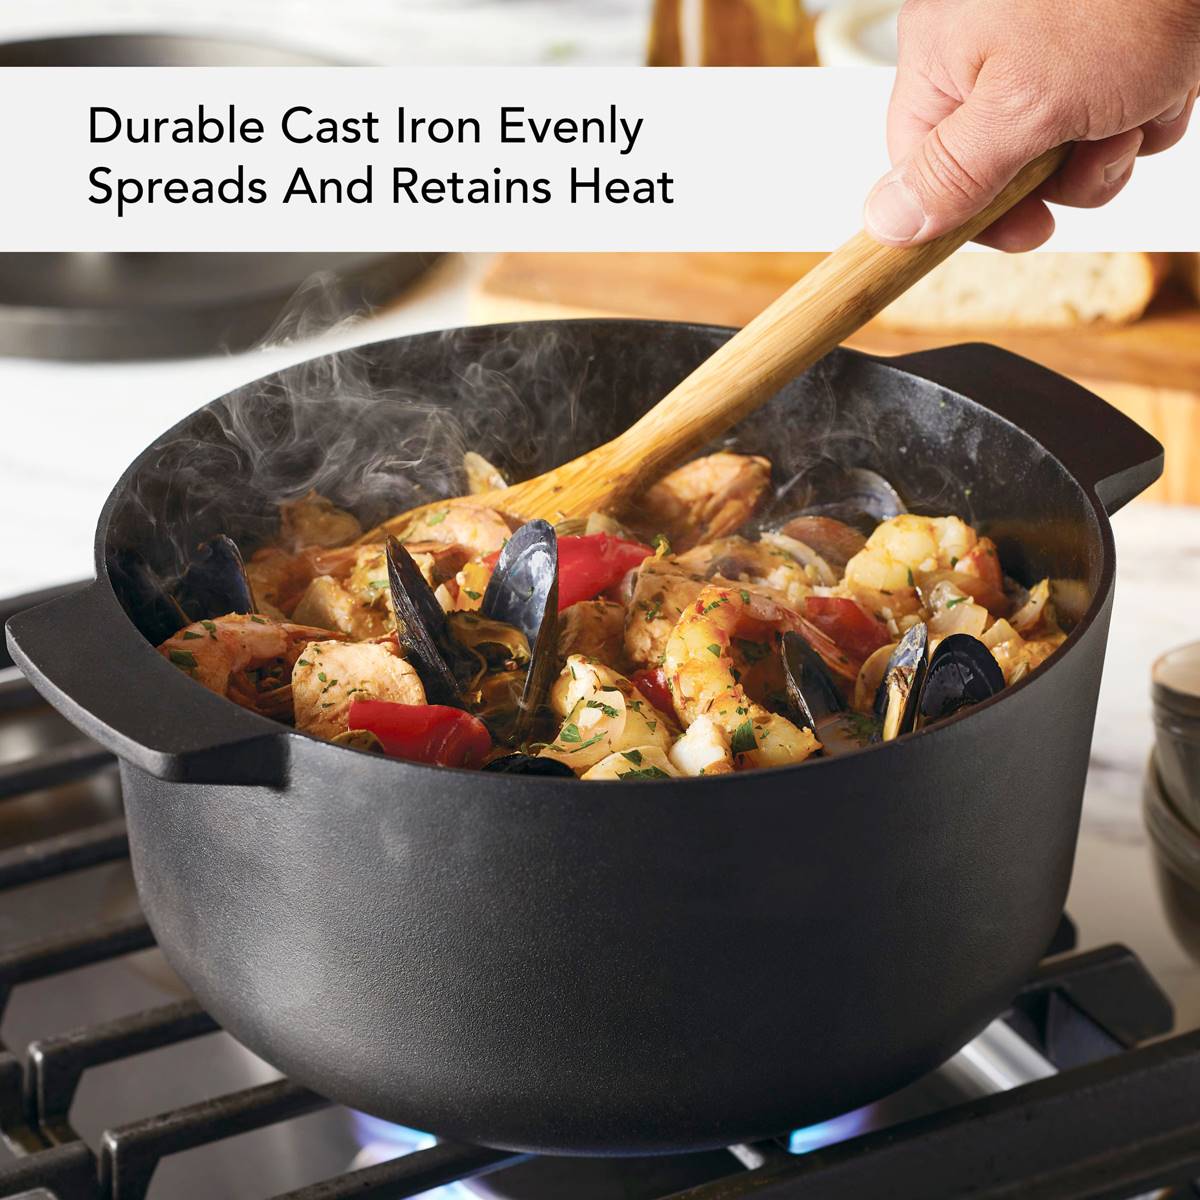 KitchenAid(R) Seasoned Cast Iron Dutch Oven Casserole Pot